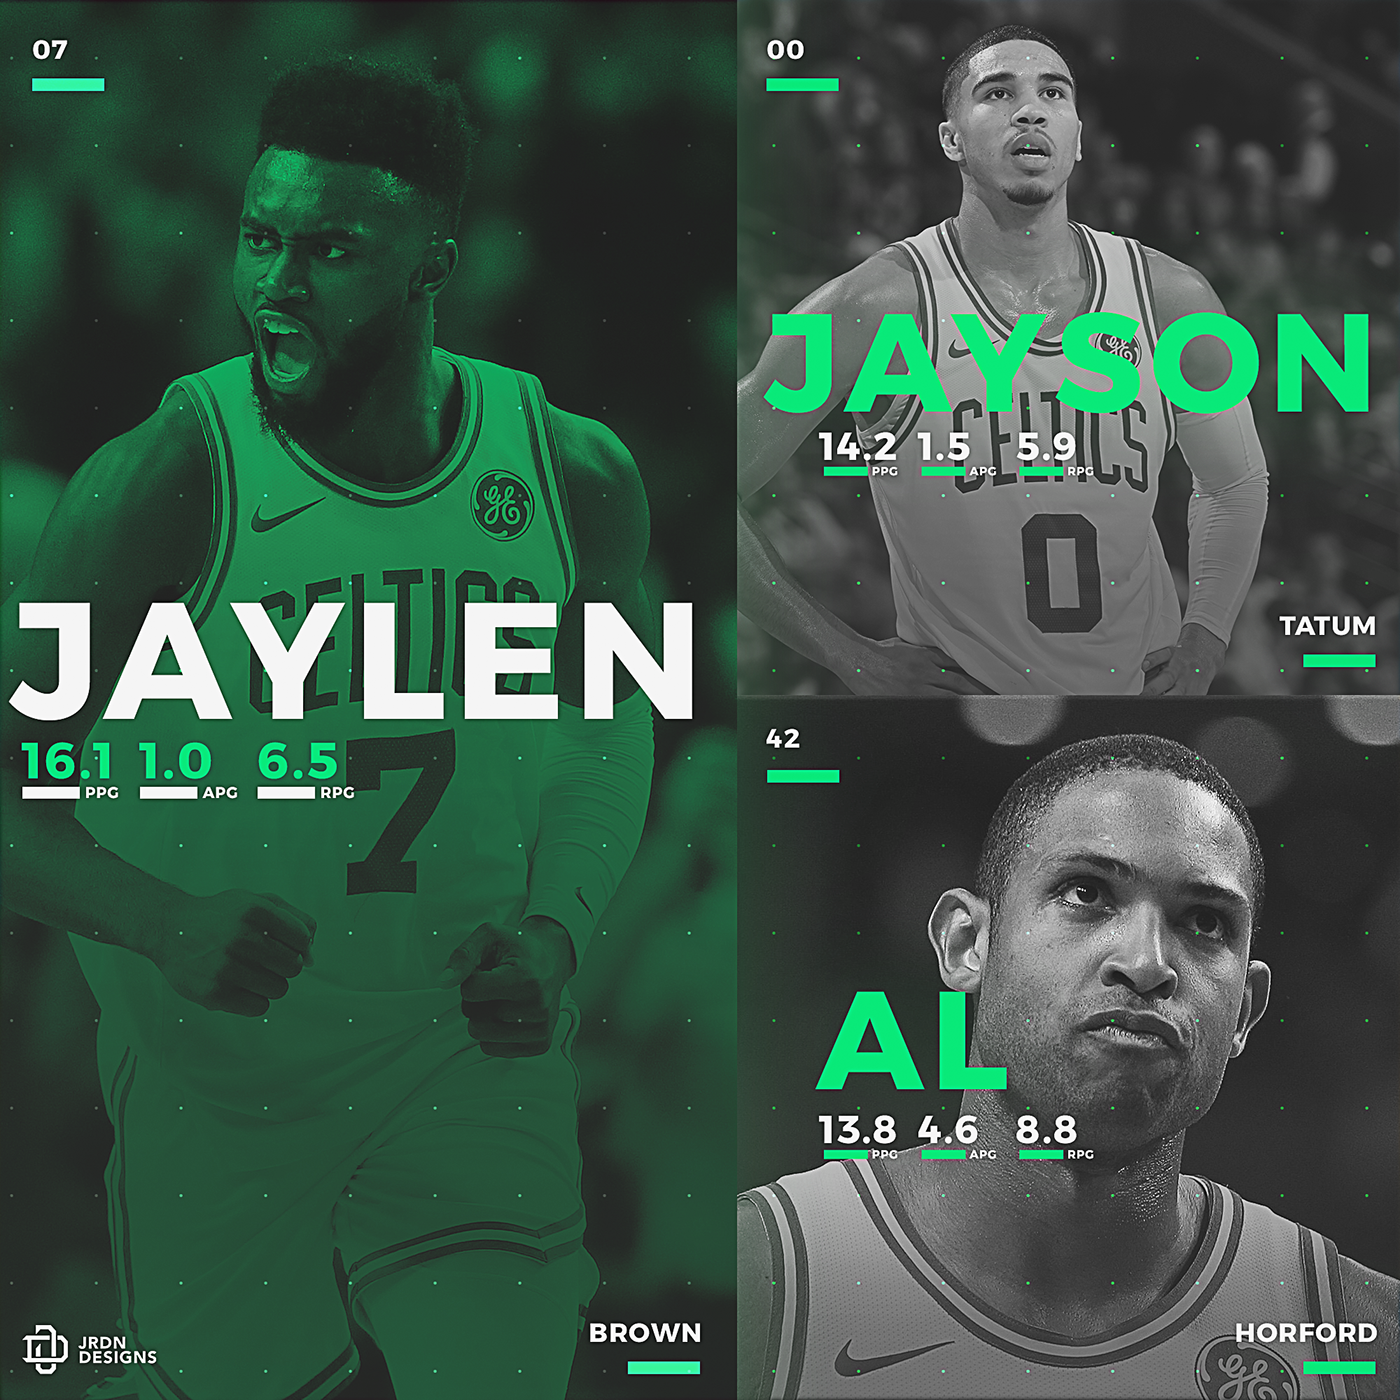 infographic NBA basketball celtics kyrie irving Boston Celtics sports